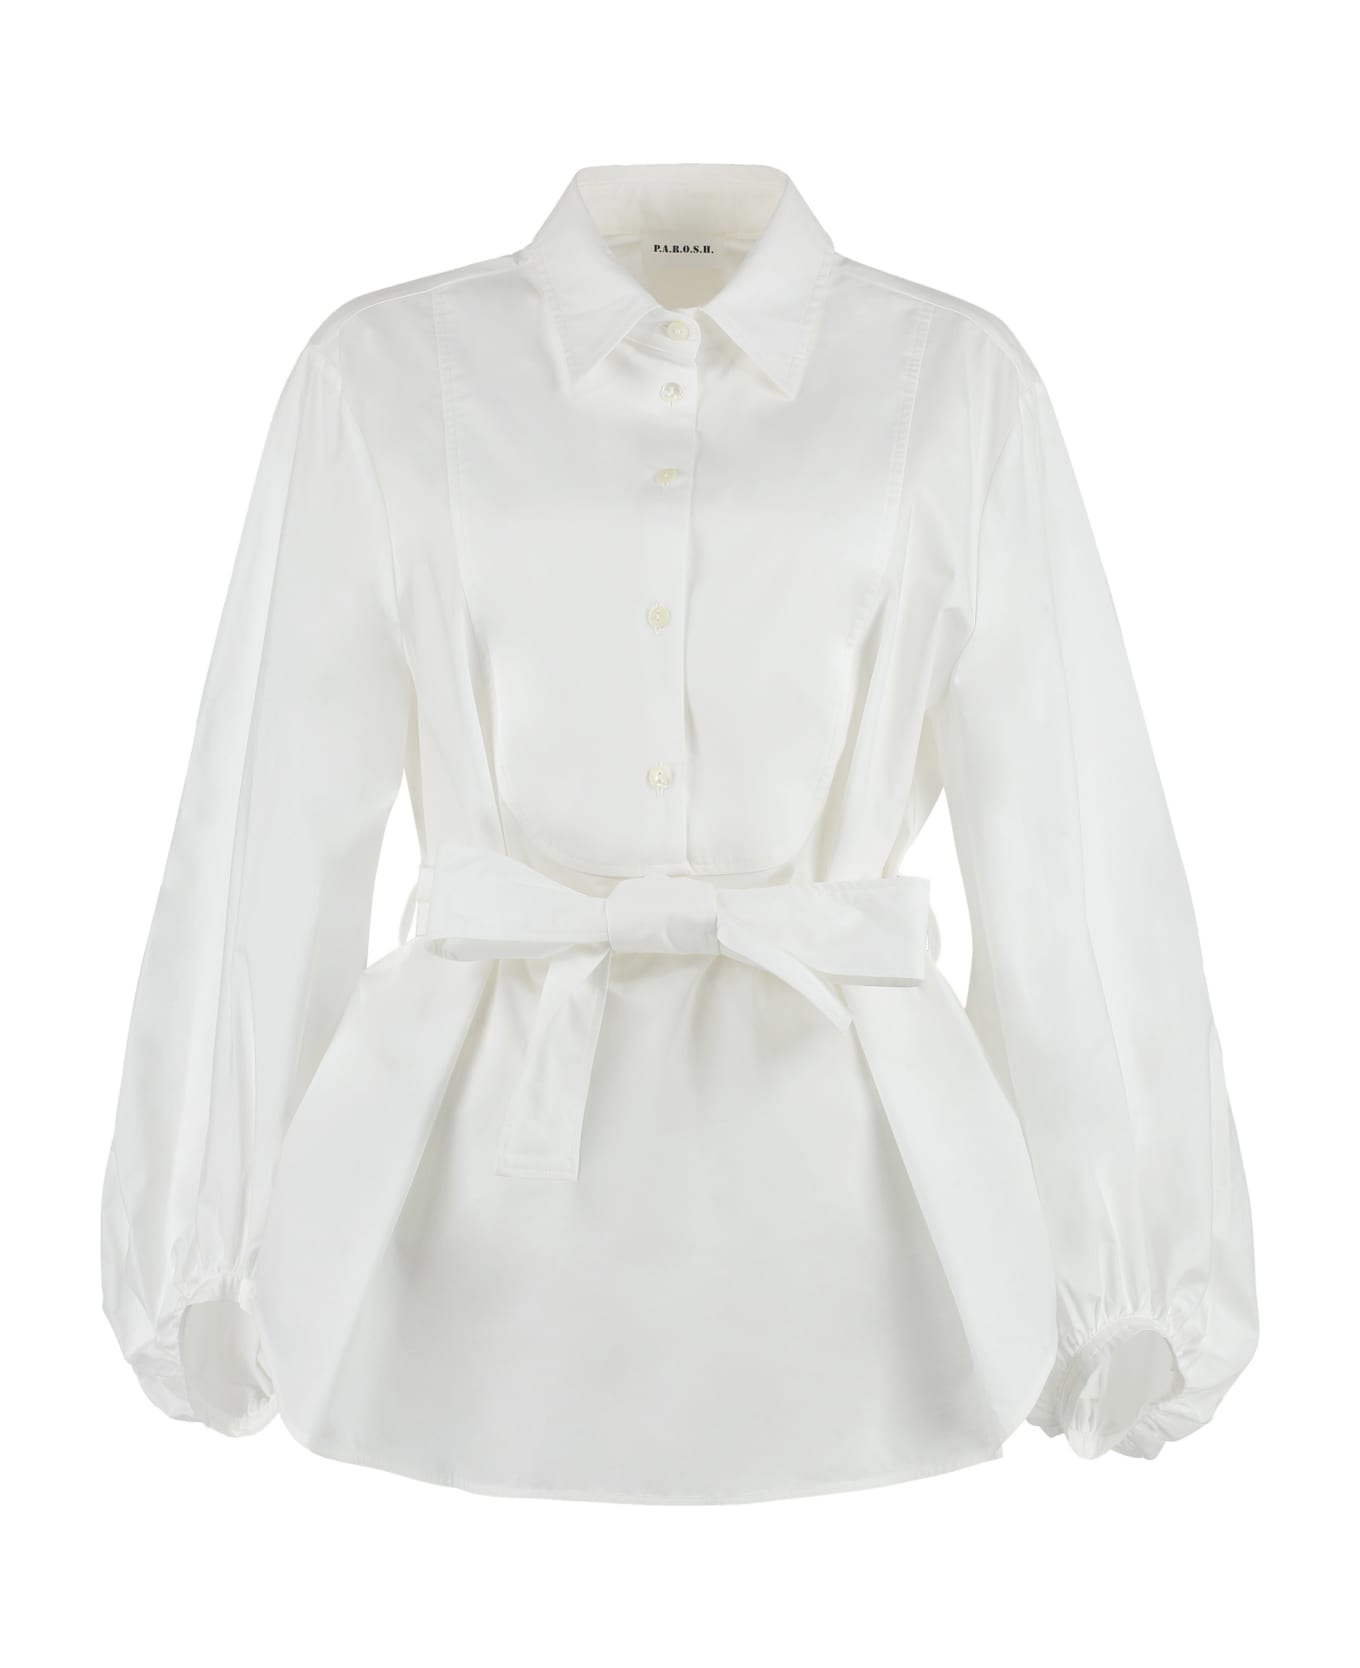 Parosh Cotton Shirt - White